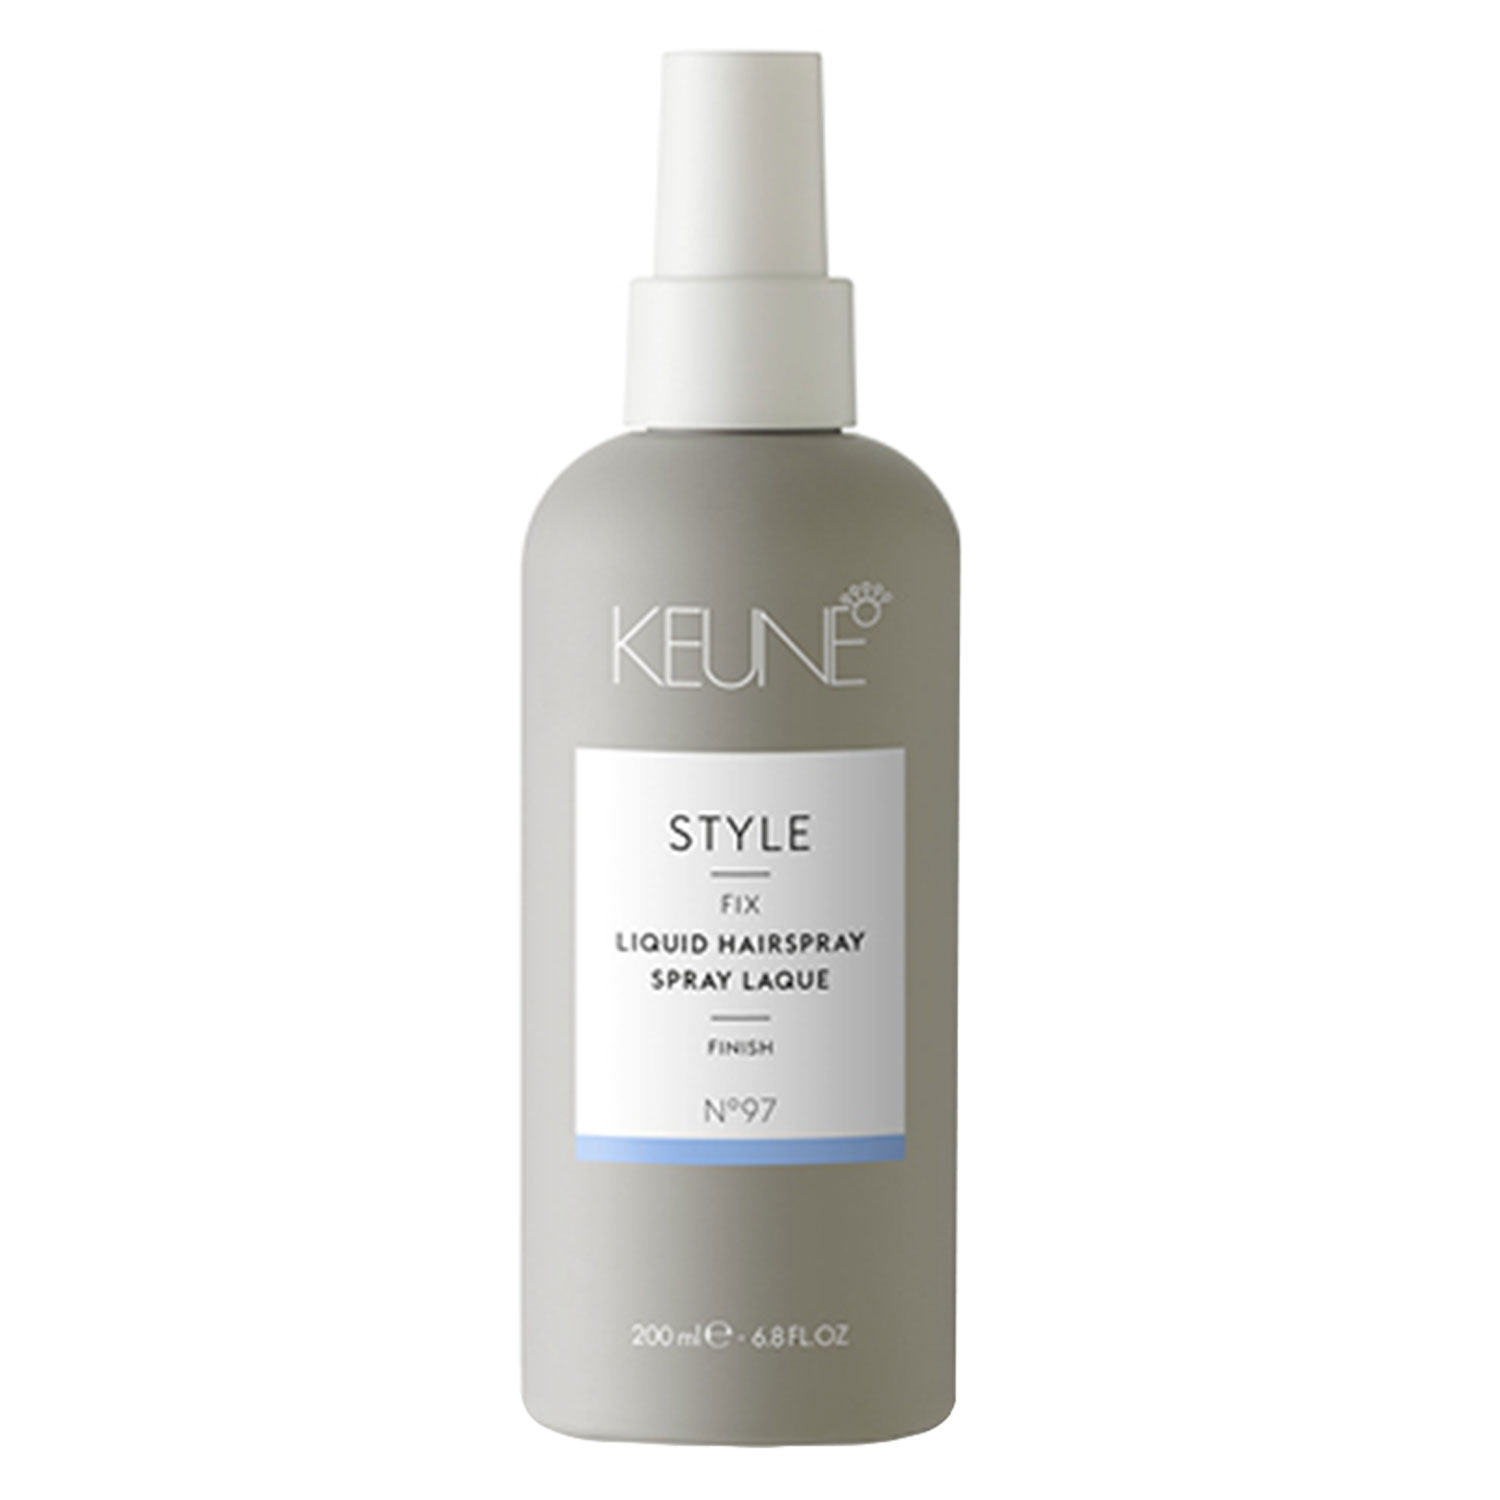 Produktbild von Keune Style - Liquid Hairspray